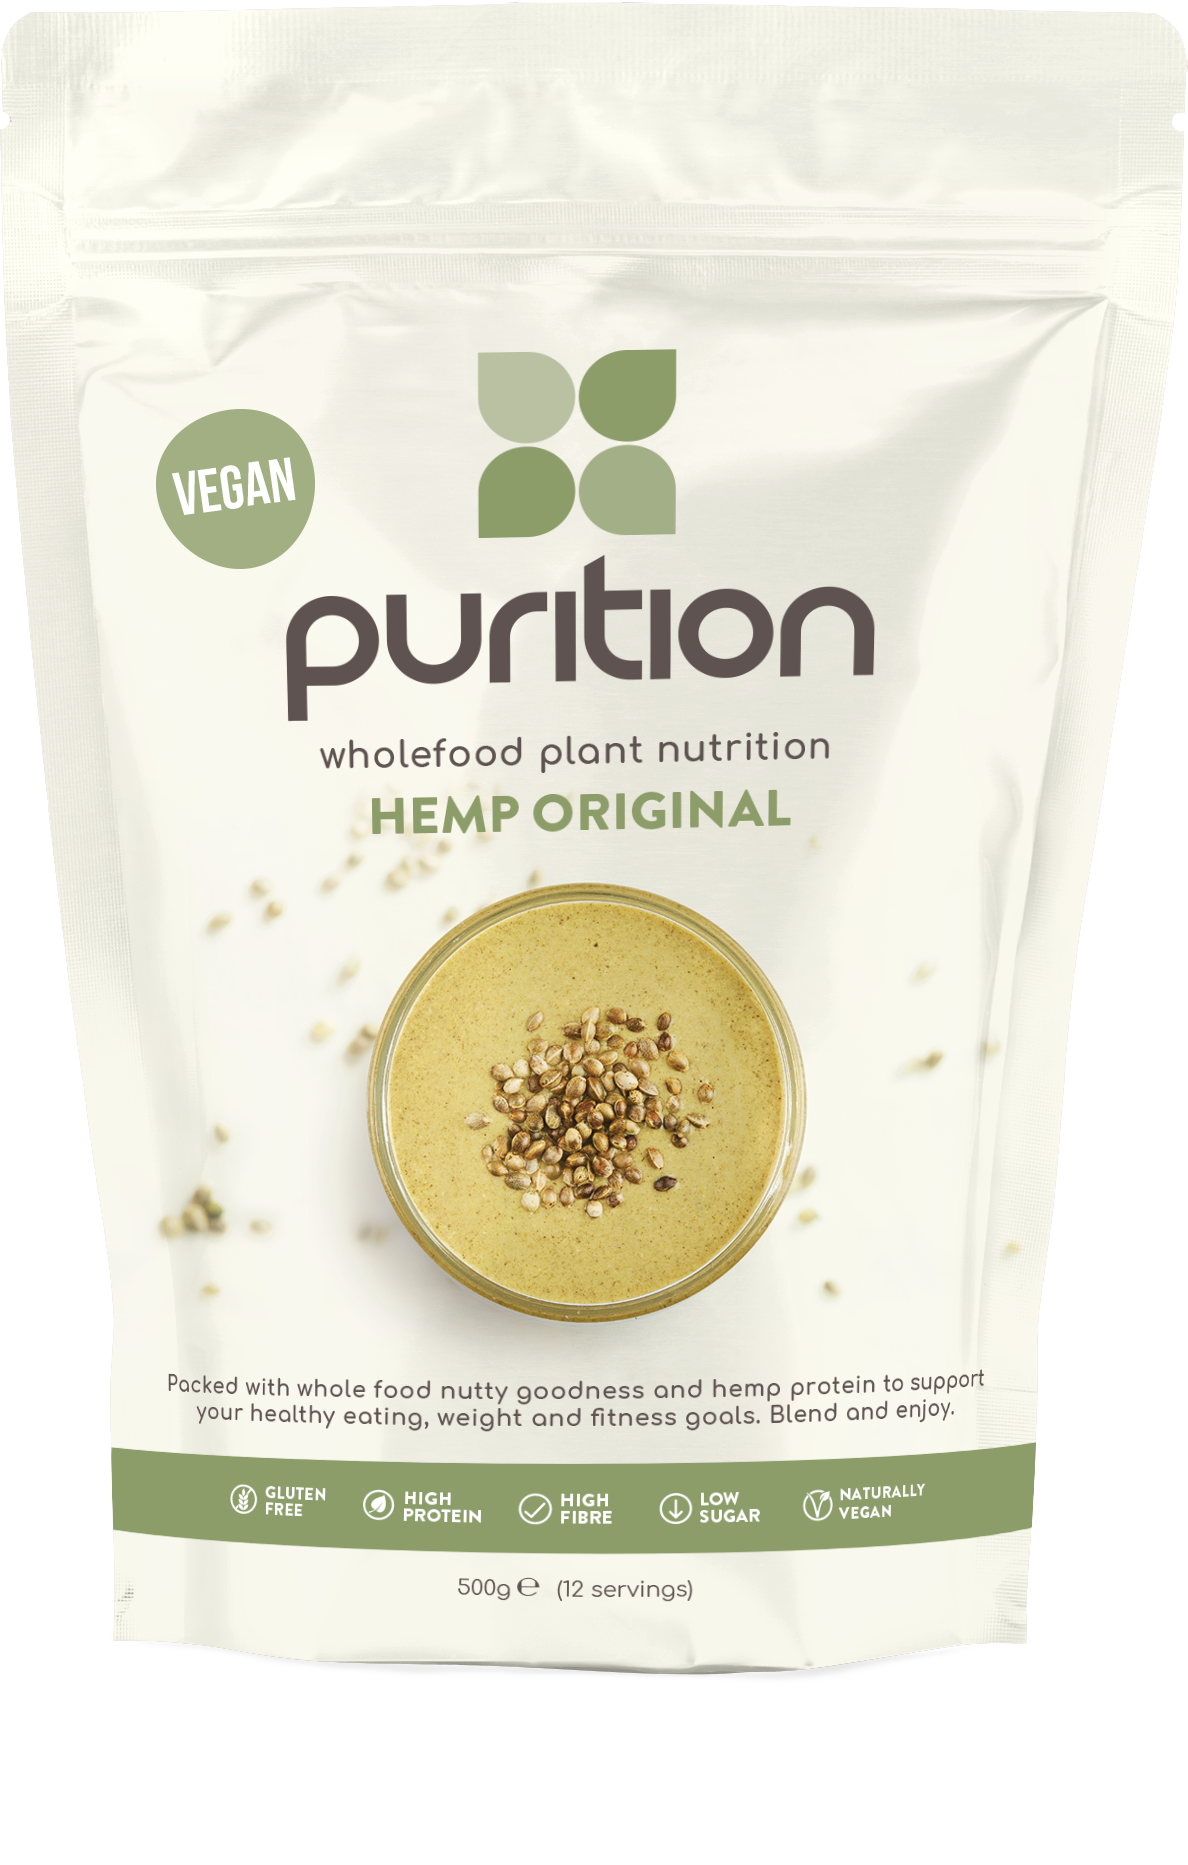 Purition Vegan Wholefood Plant Nutrition Hemp Original 500g